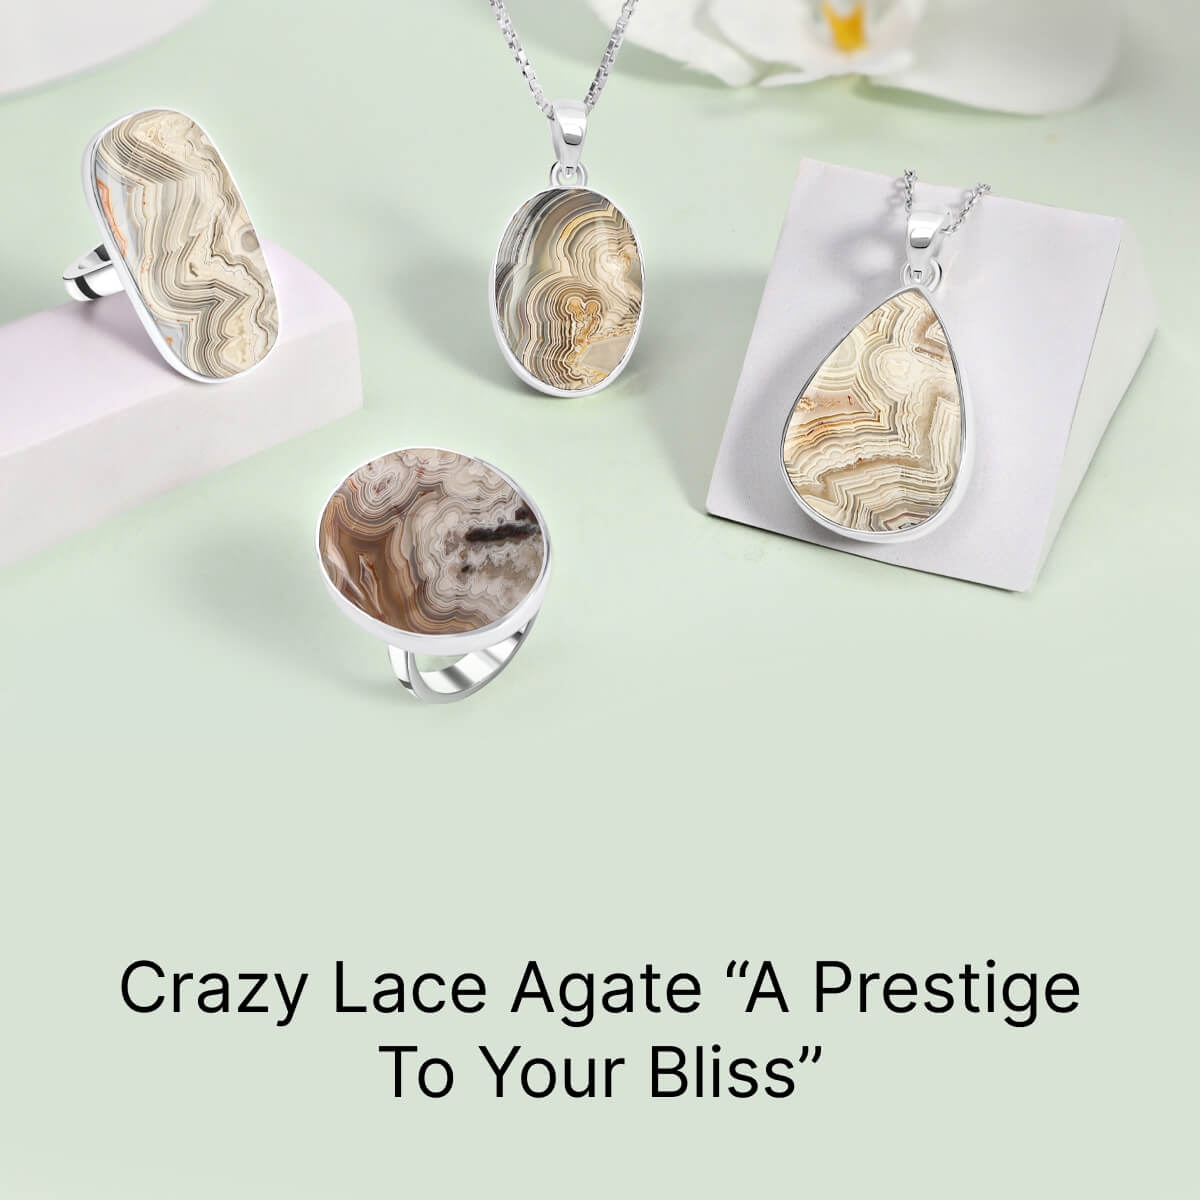 Crazy Lace Agate: Spiritual benefits